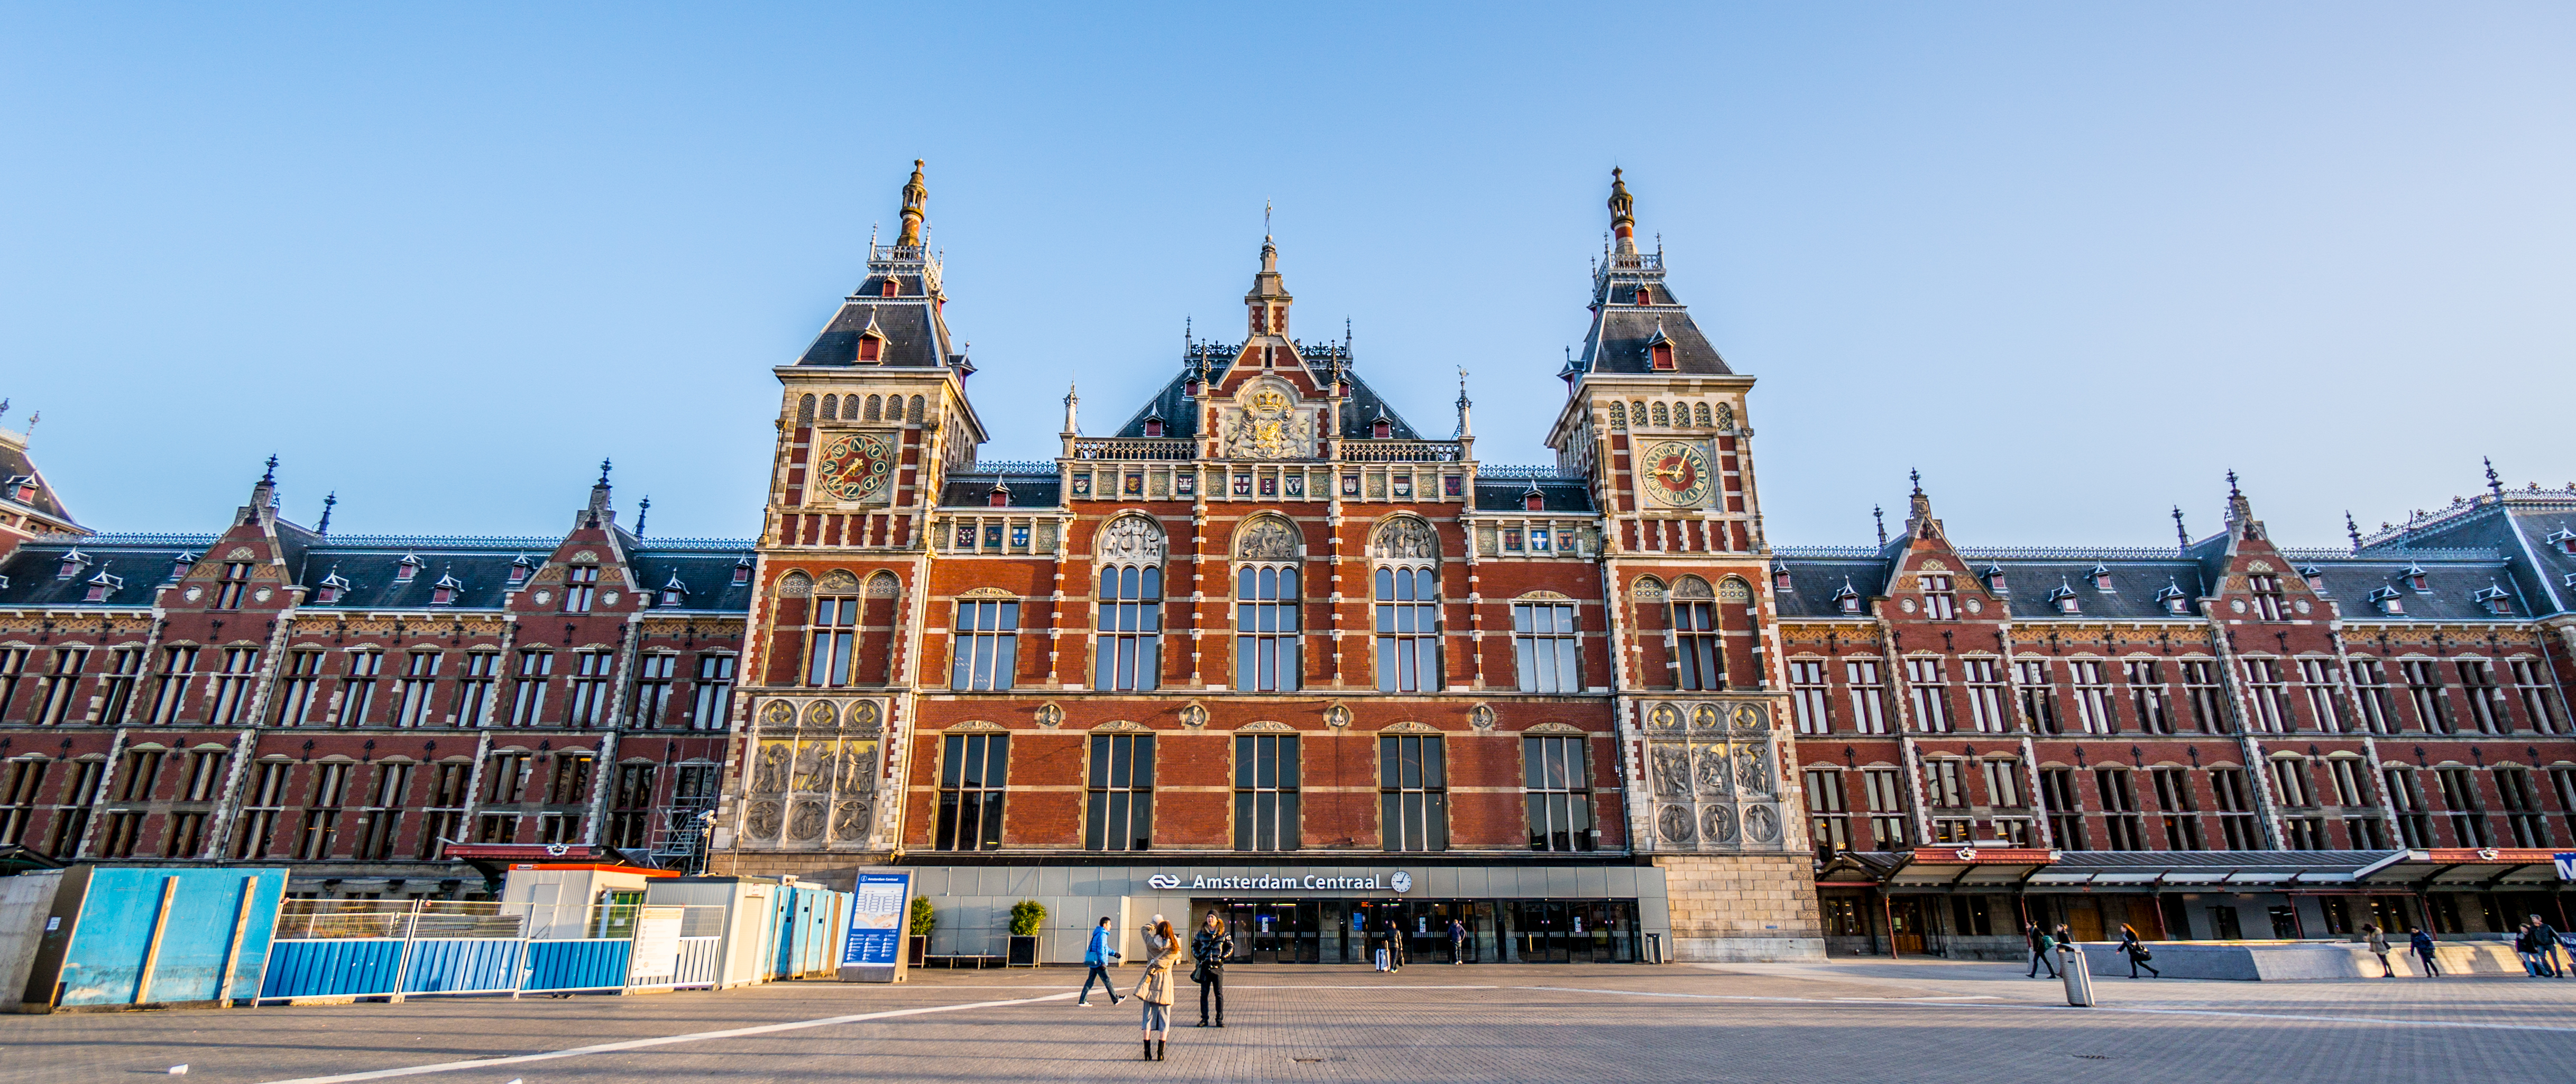 Amsterdam_Central_Station1